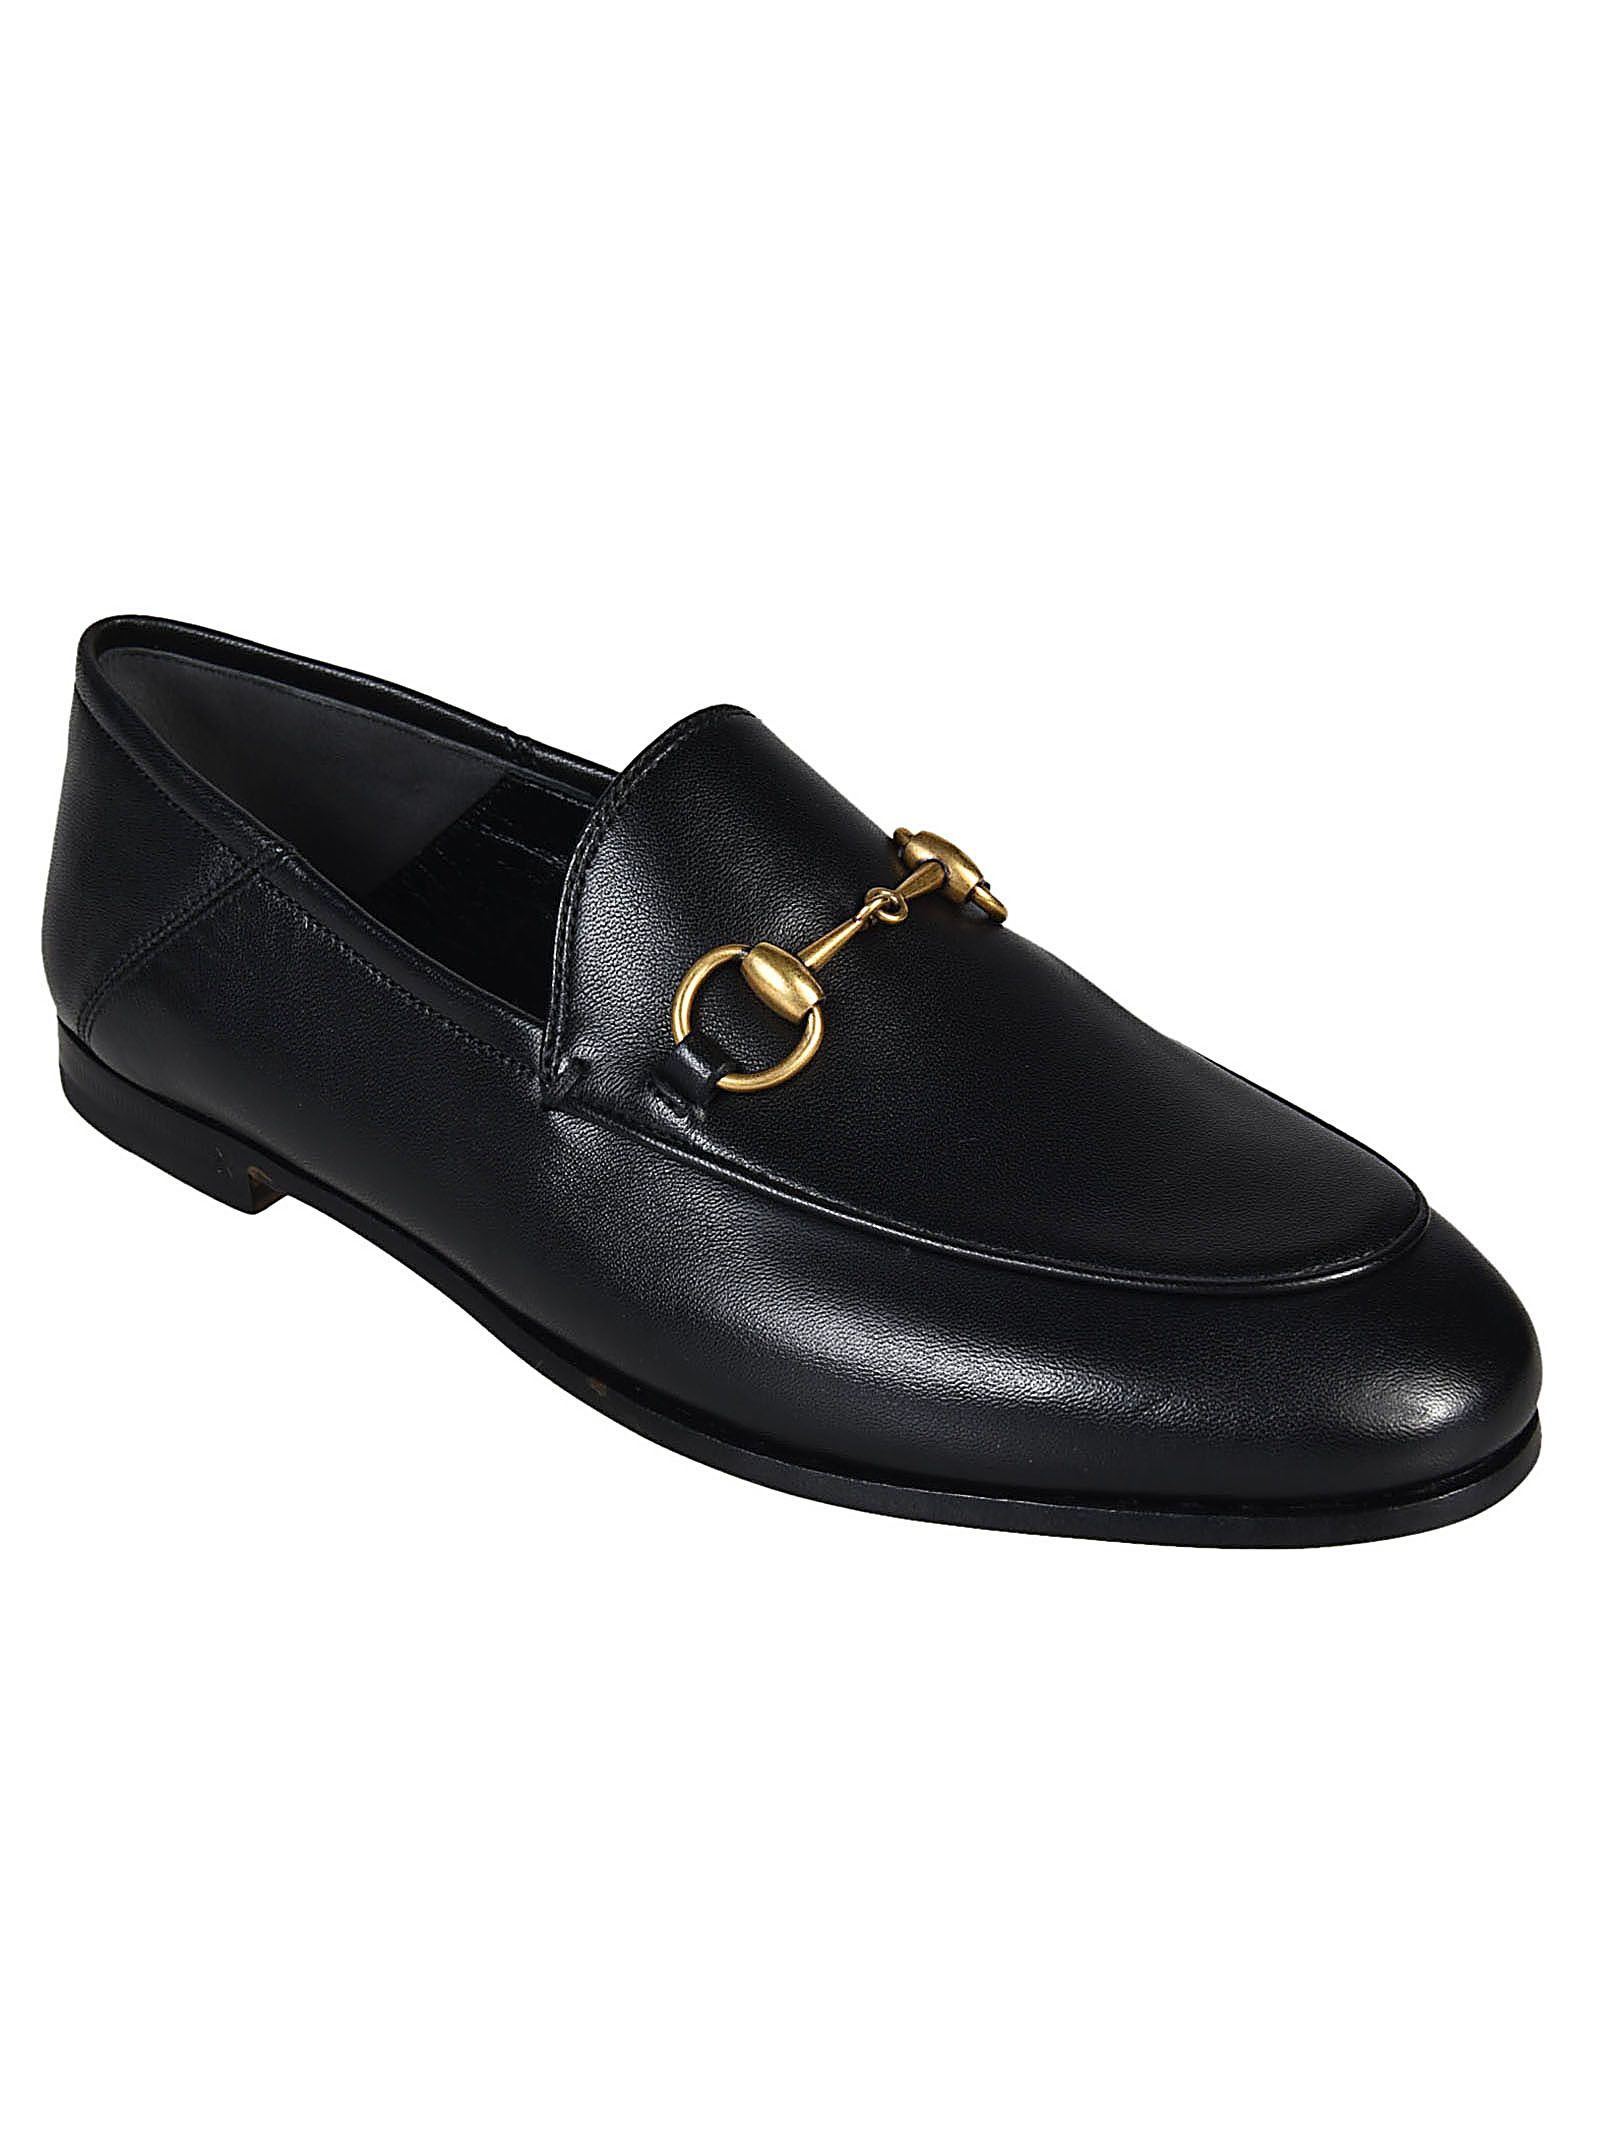 Gucci - Gucci Brixton Horsebit Loafers - Black, Women's Flat Shoes ...